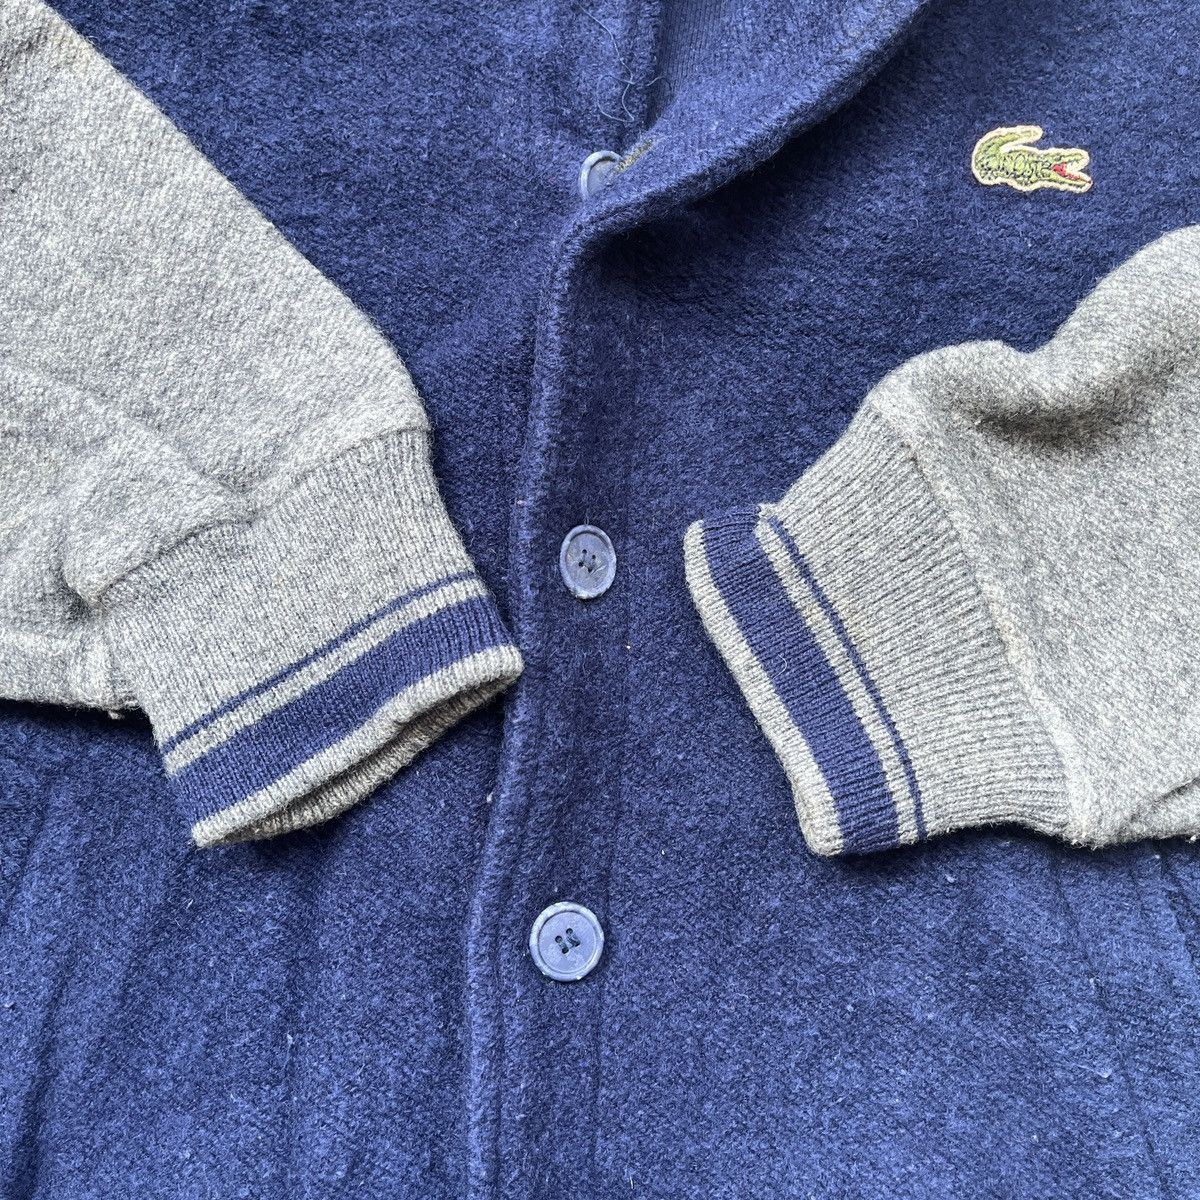 Bomber Style Jacket Lacoste Vintage 80s Sweater Japan - 13